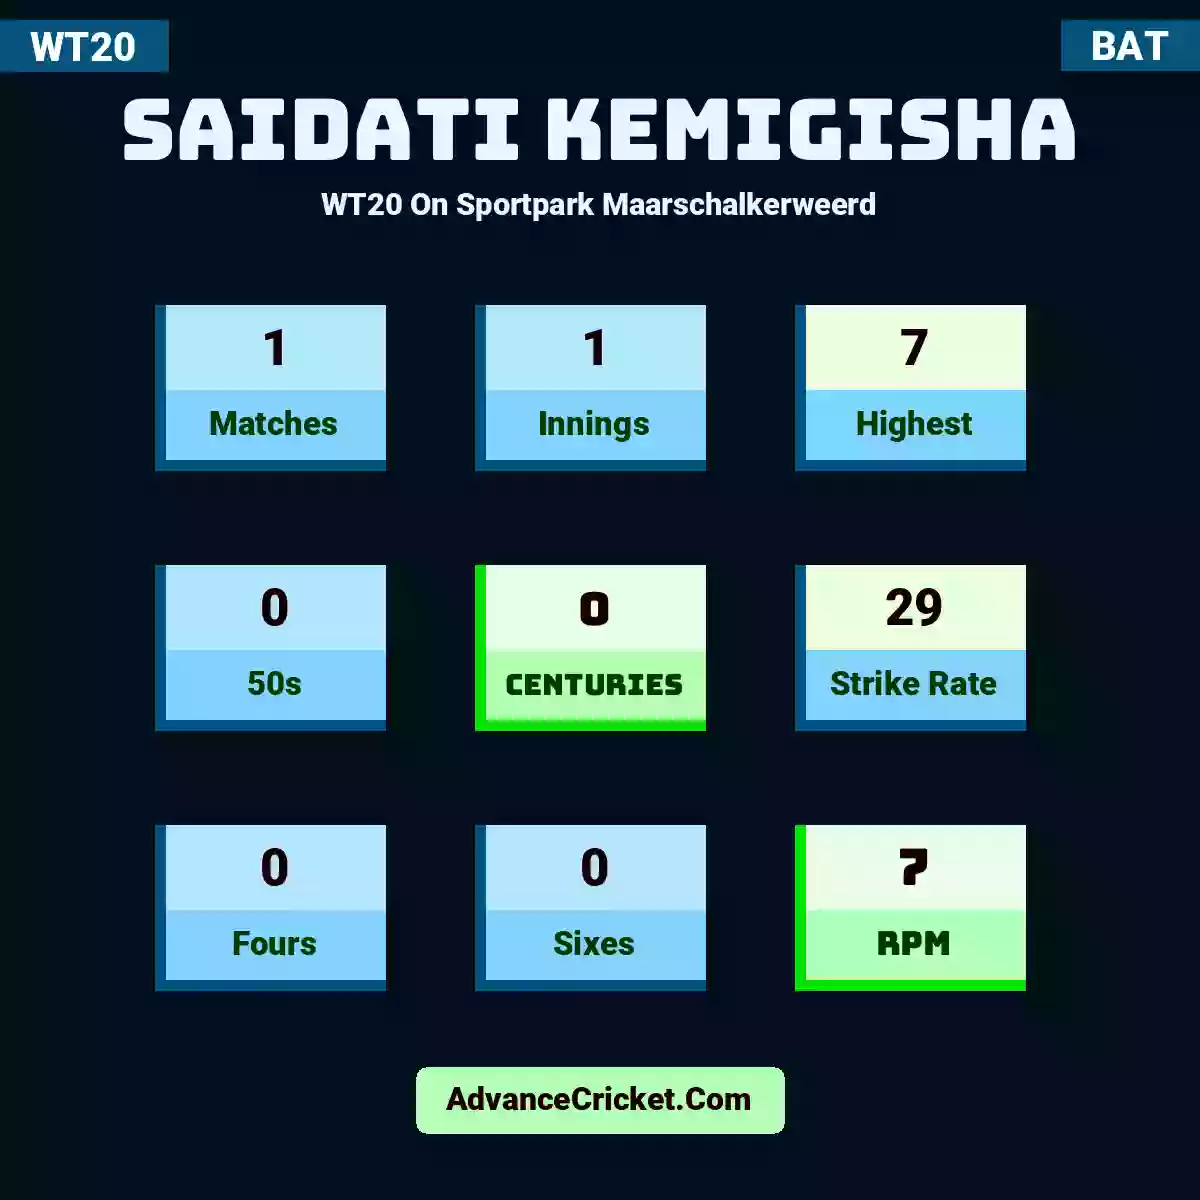 Saidati Kemigisha WT20  On Sportpark Maarschalkerweerd, Saidati Kemigisha played 1 matches, scored 7 runs as highest, 0 half-centuries, and 0 centuries, with a strike rate of 29. S.Kemigisha hit 0 fours and 0 sixes, with an RPM of 7.